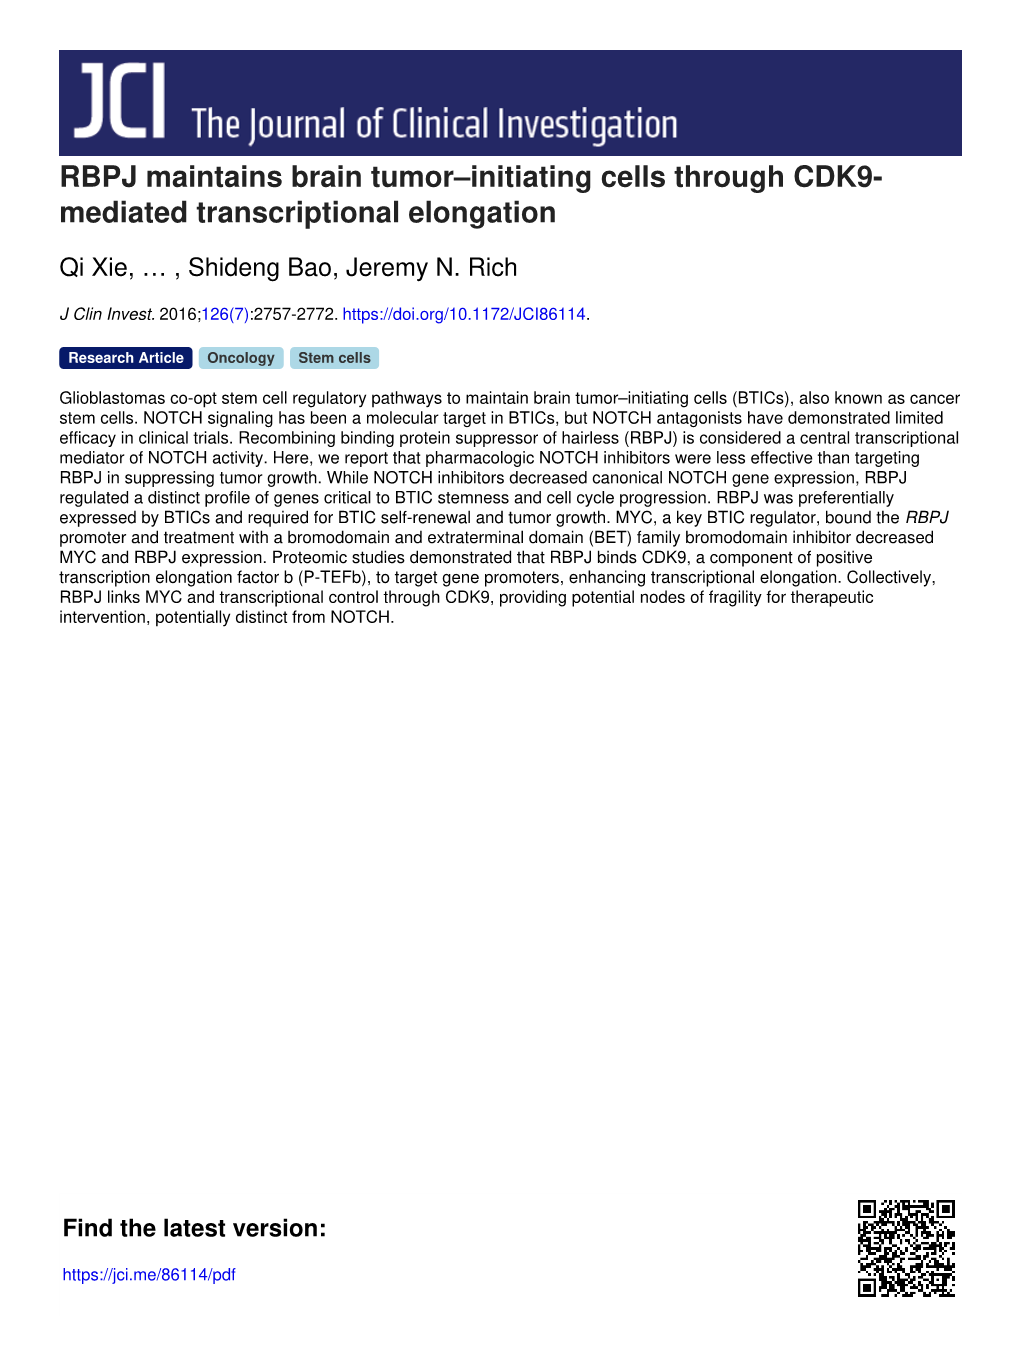 RBPJ Maintains Brain Tumor–Initiating Cells Through CDK9- Mediated Transcriptional Elongation